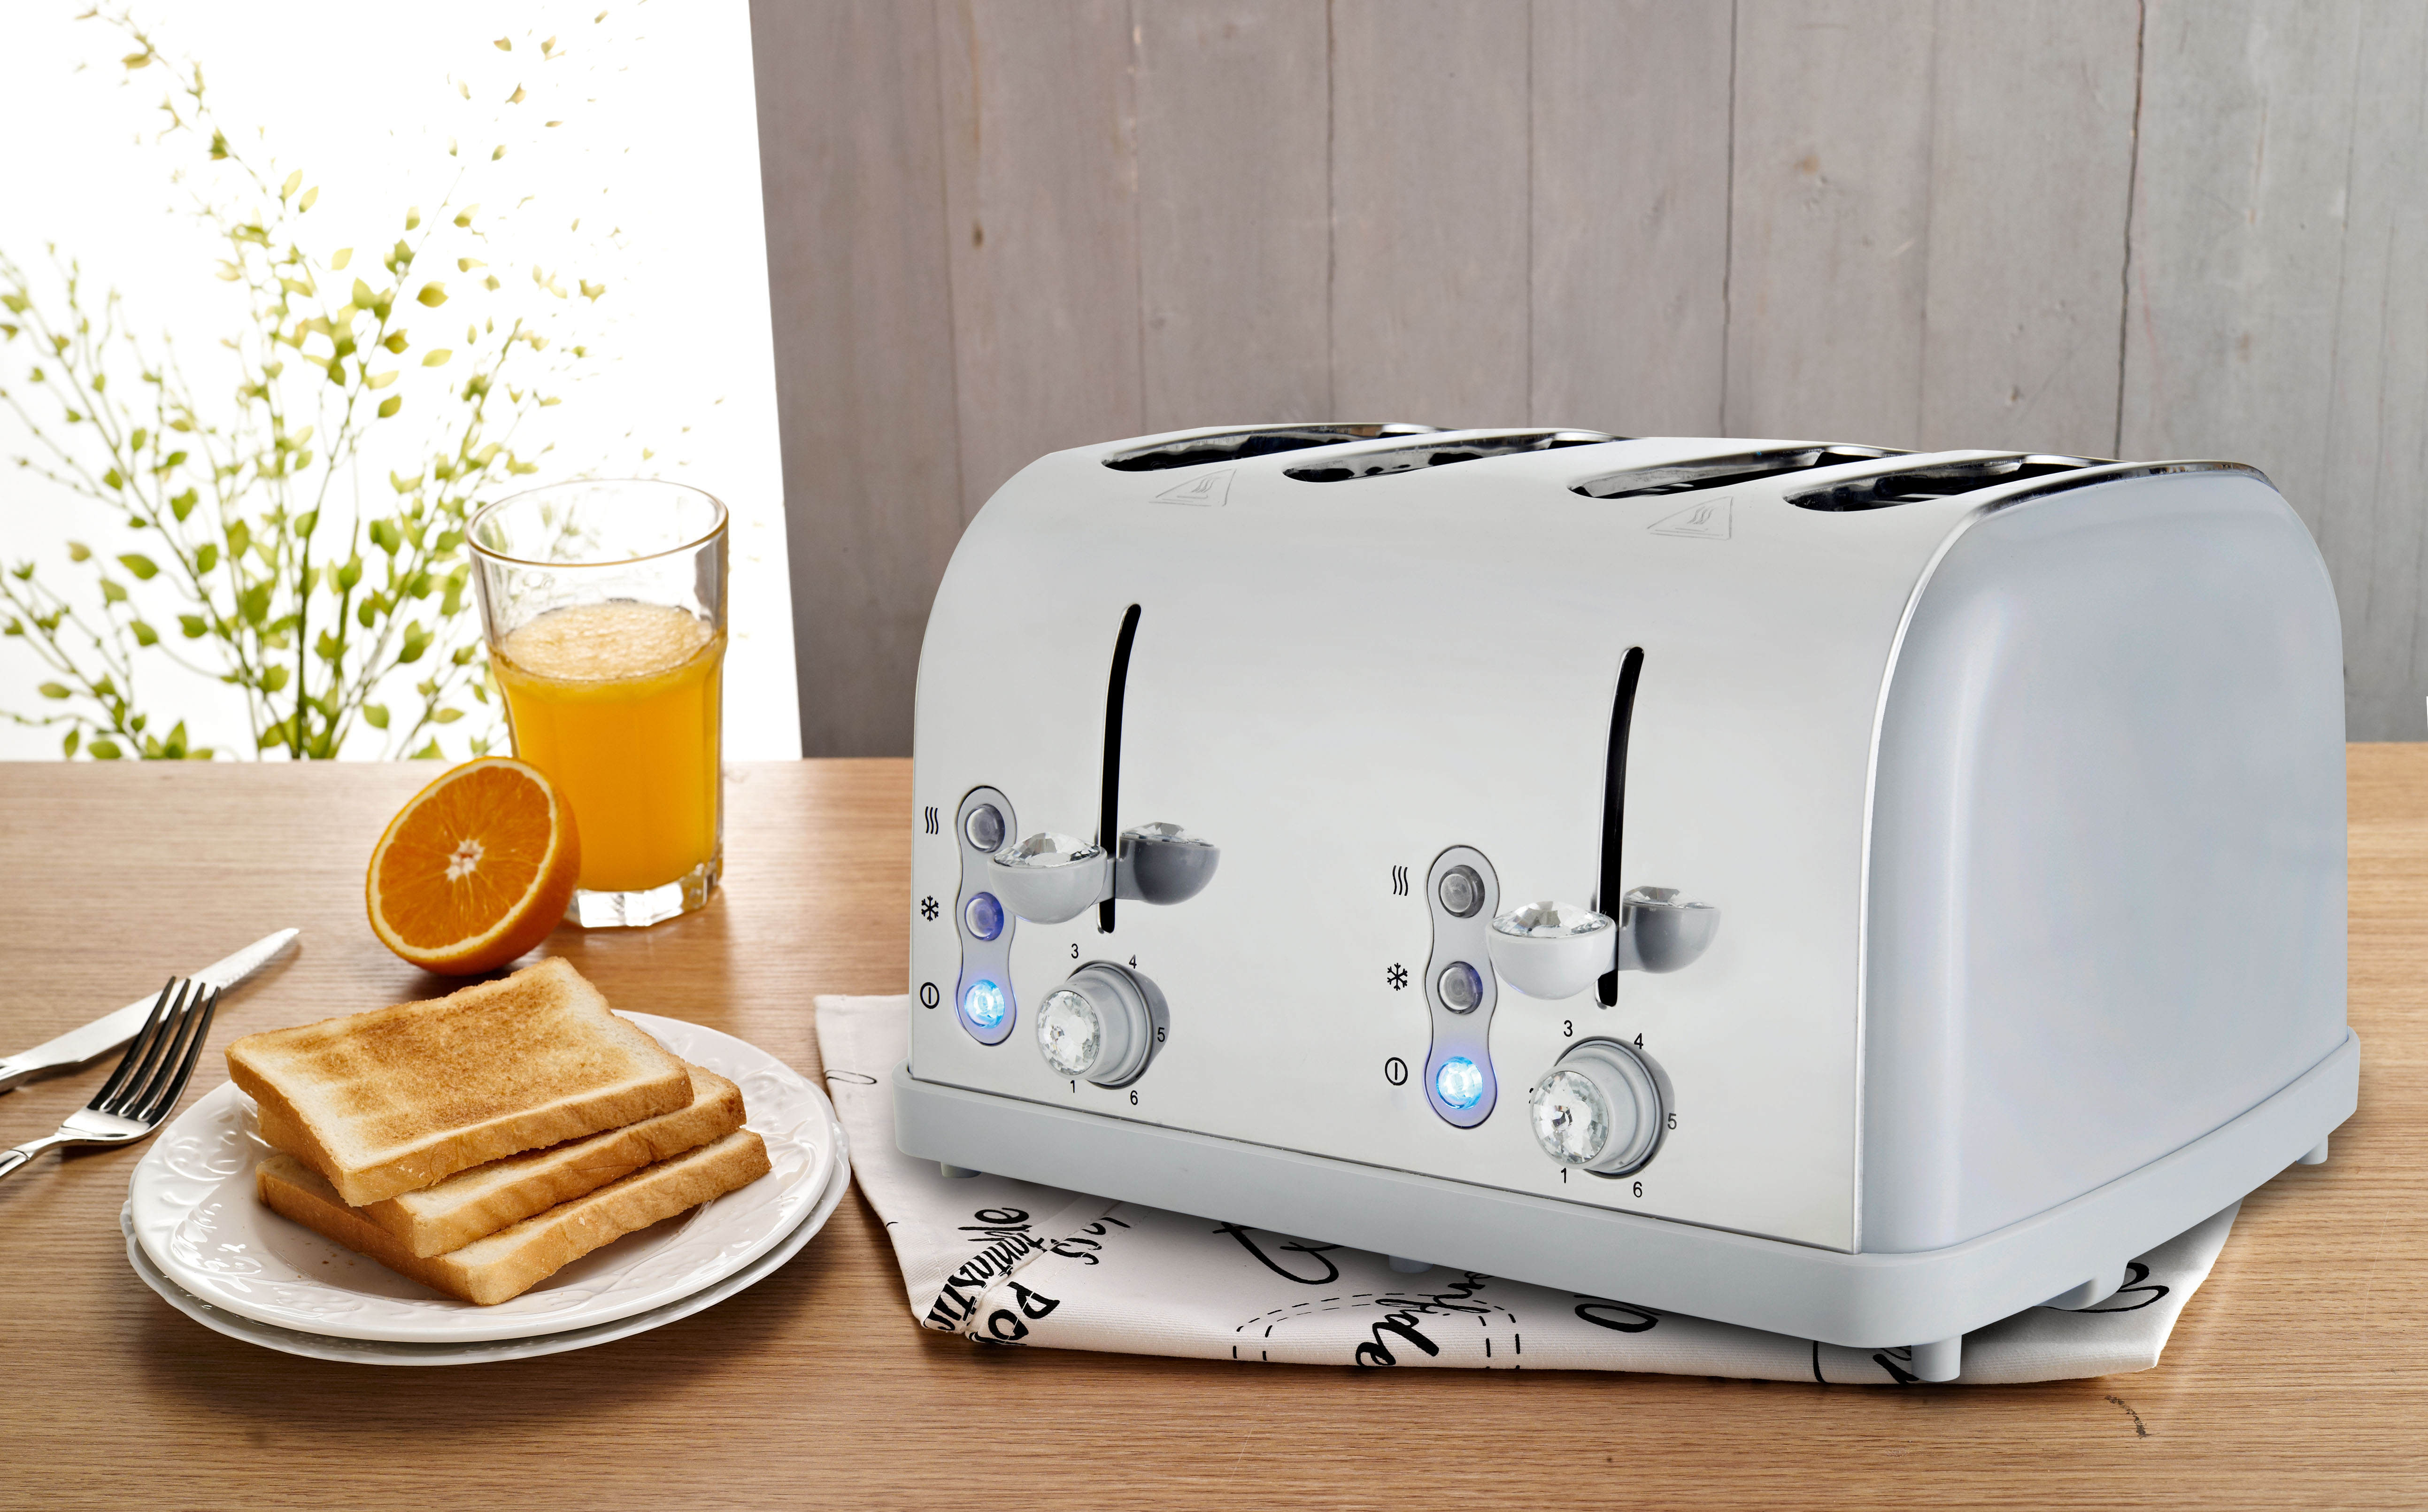 4 Slice toaster